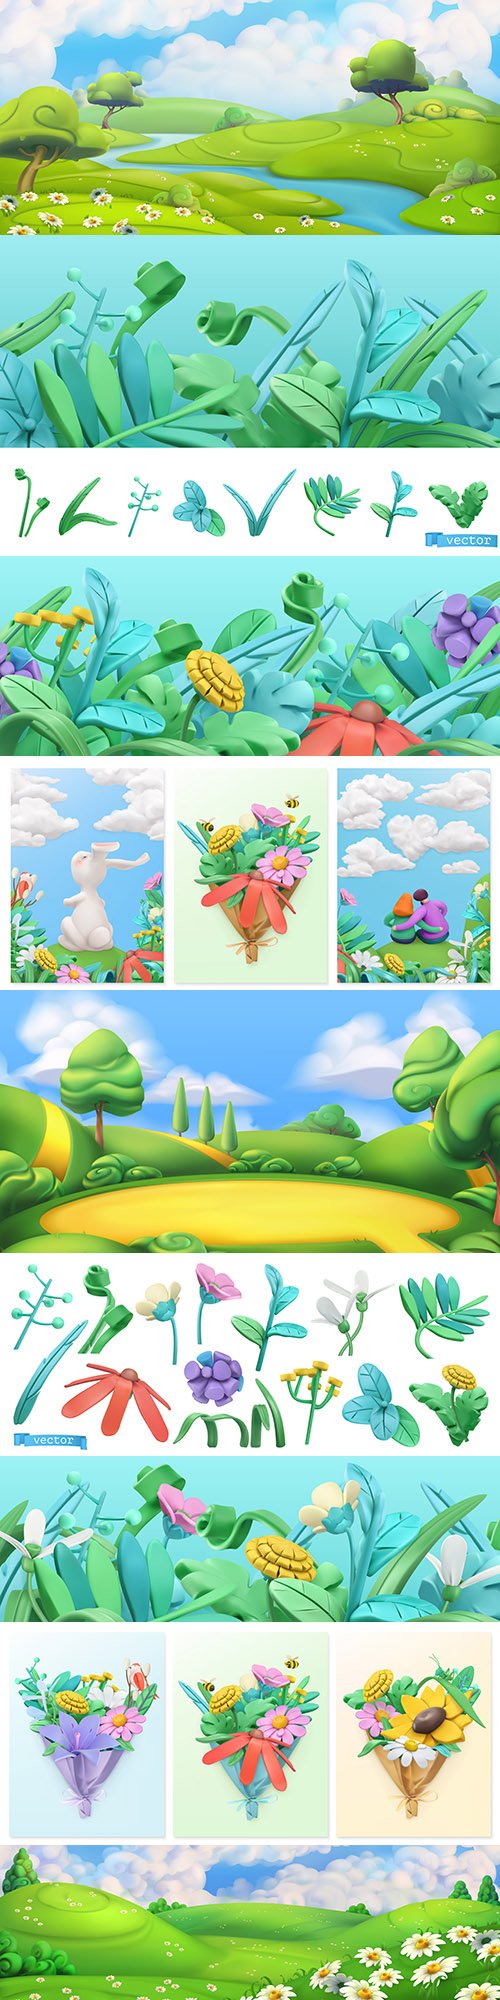 Landscape and spring flowers 3d illustrations